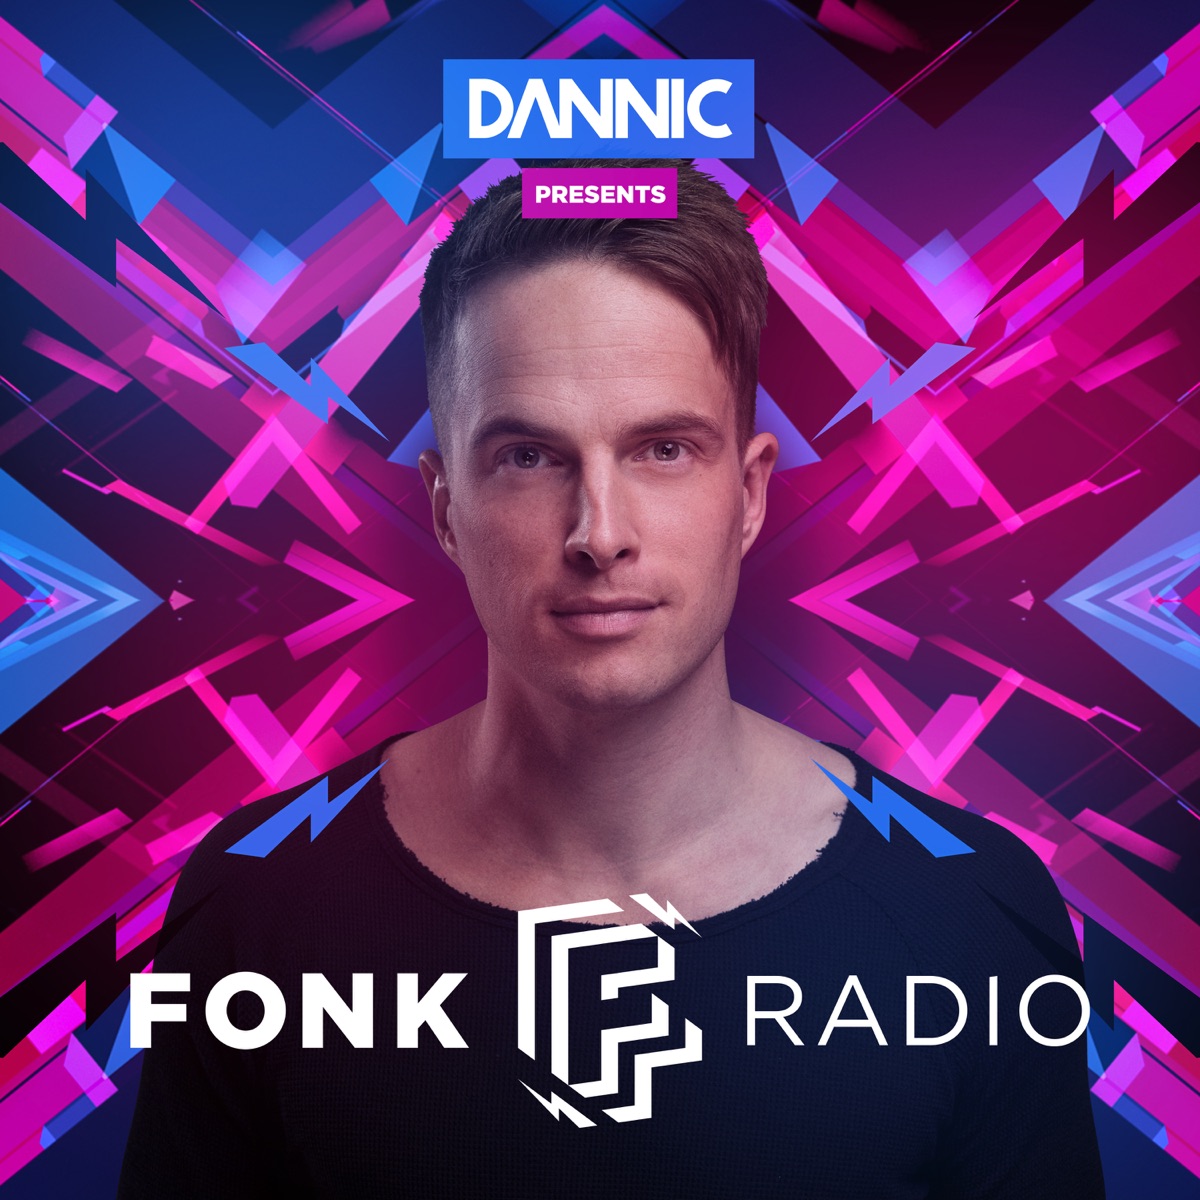 Dannic presents Fonk Radio – Podcast – Podtail